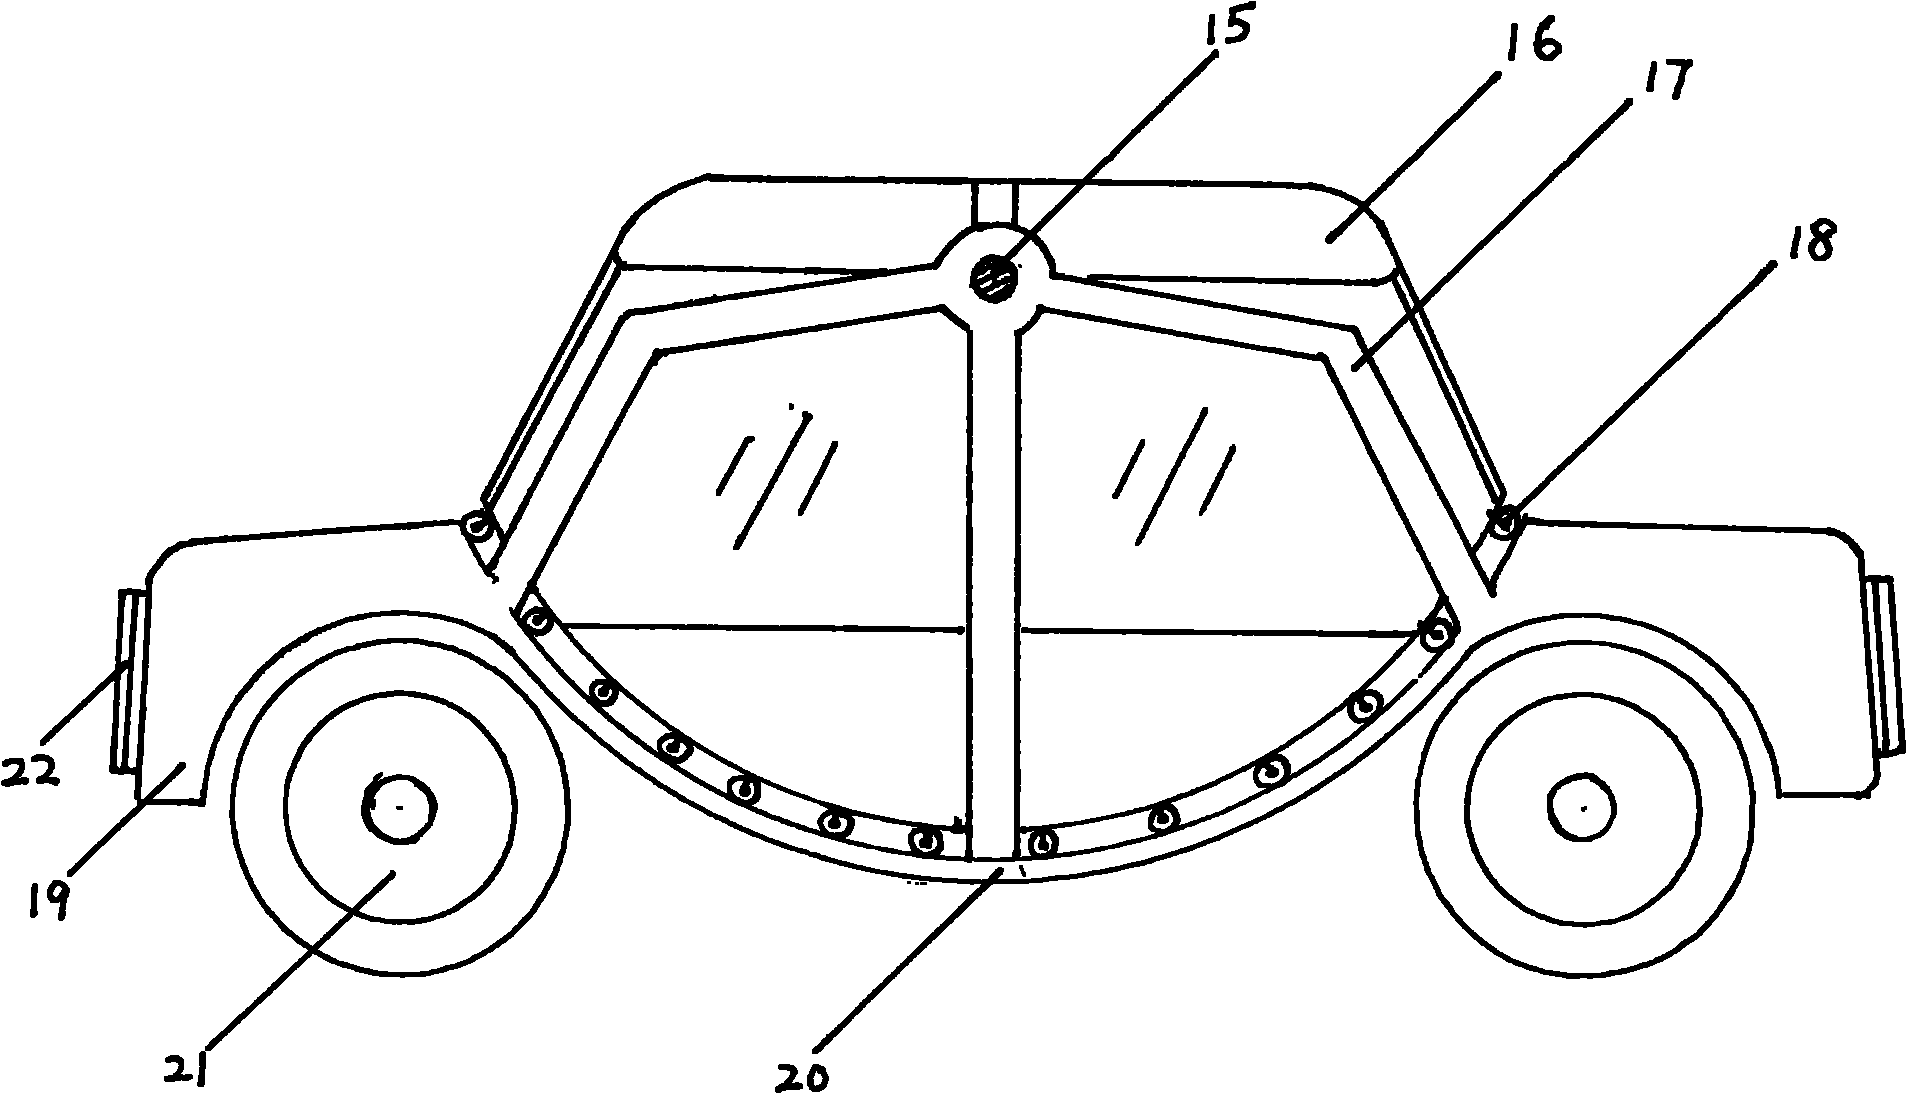 Compound pendulum type safe vehicle